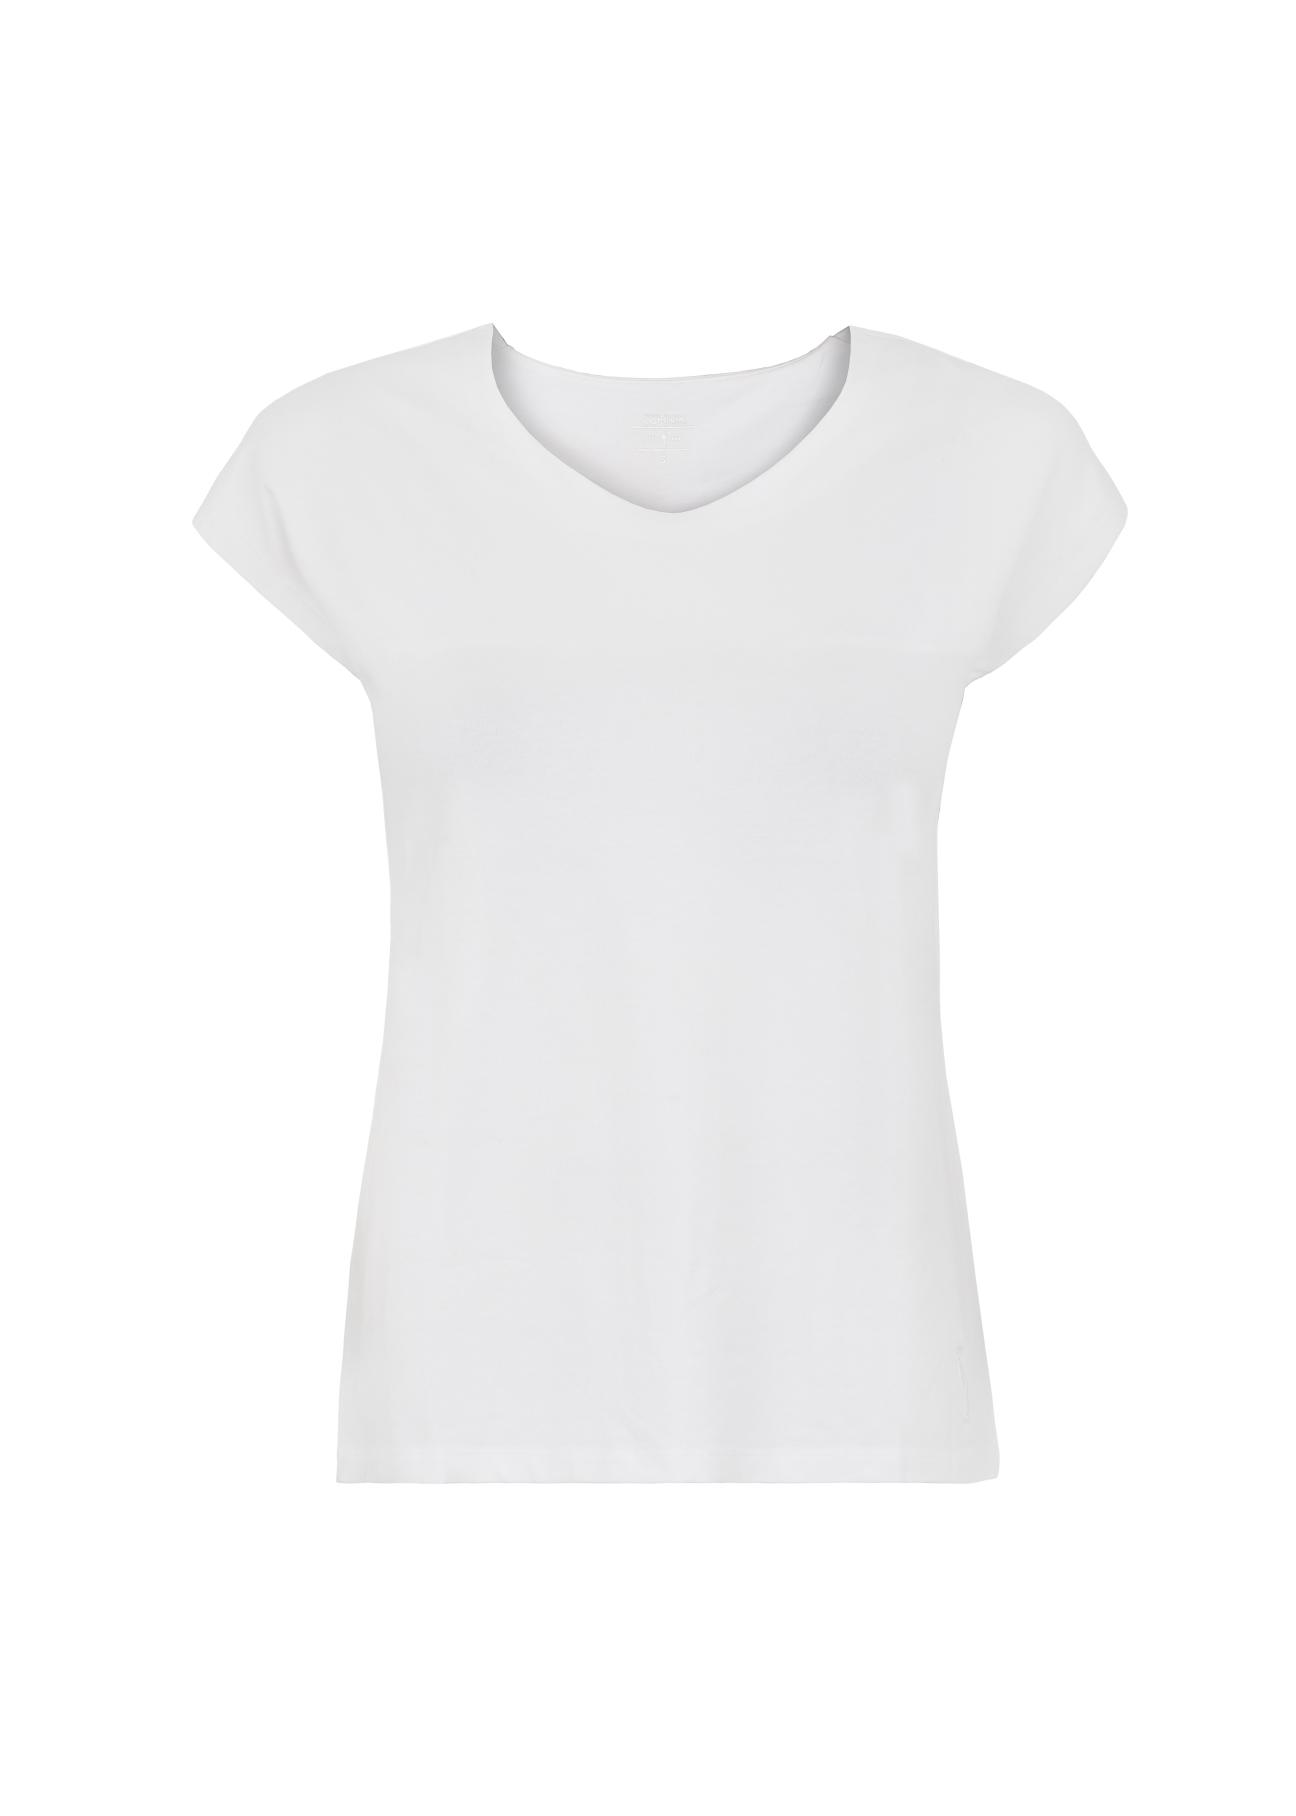 Biały T-shirt basic damski TSHDT-0068-11(W21)